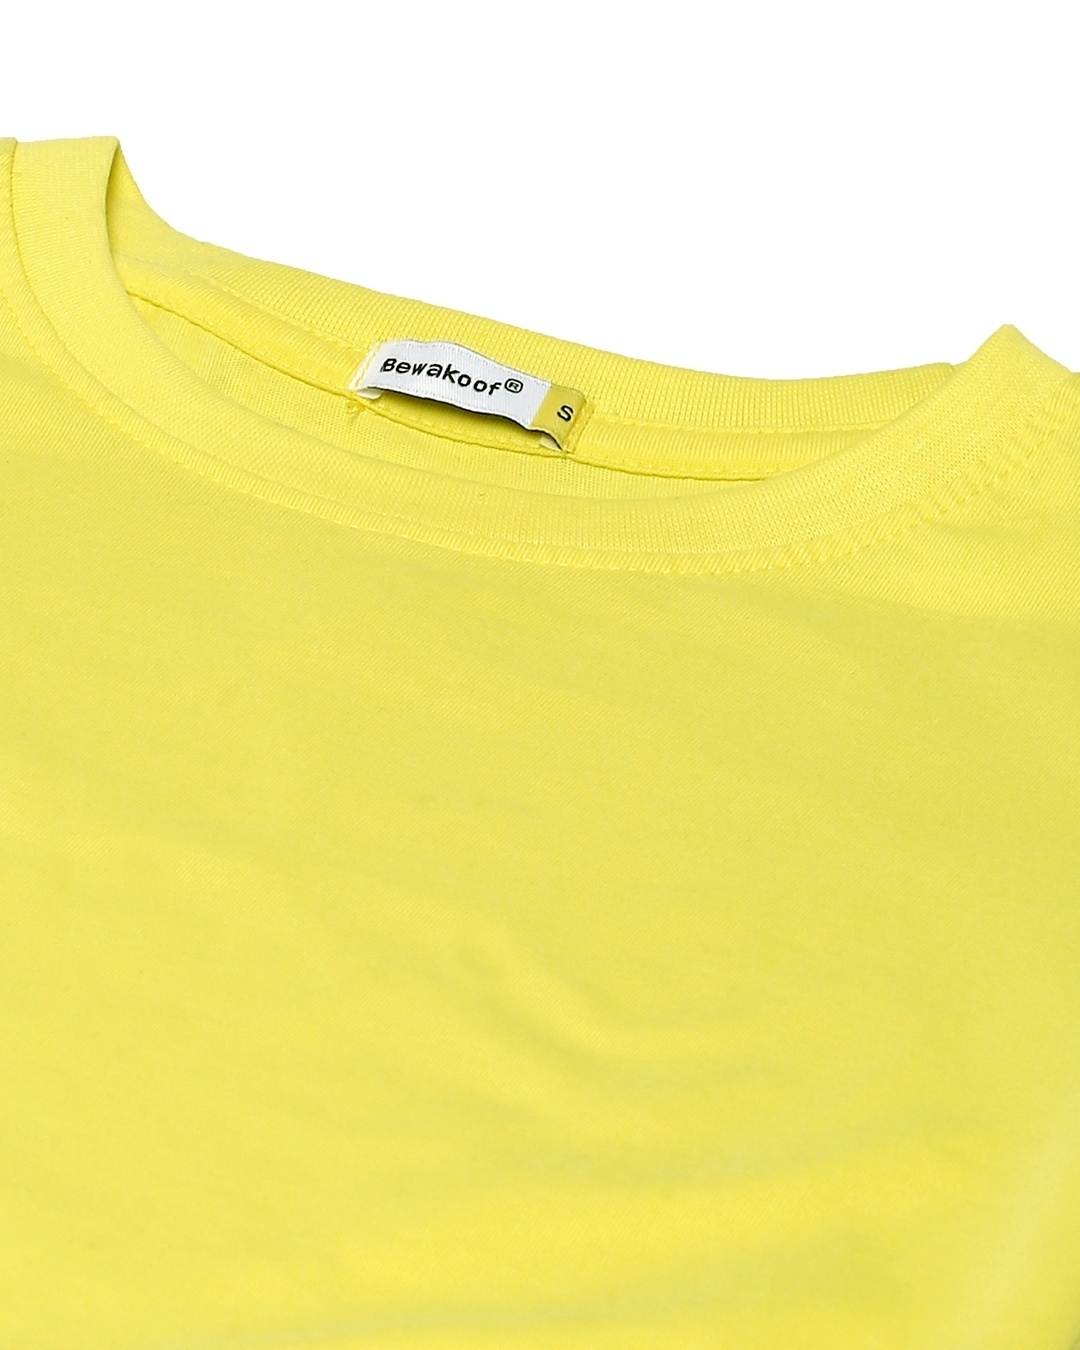 Shop Celandine Half Sleeve T-shirt For Women's